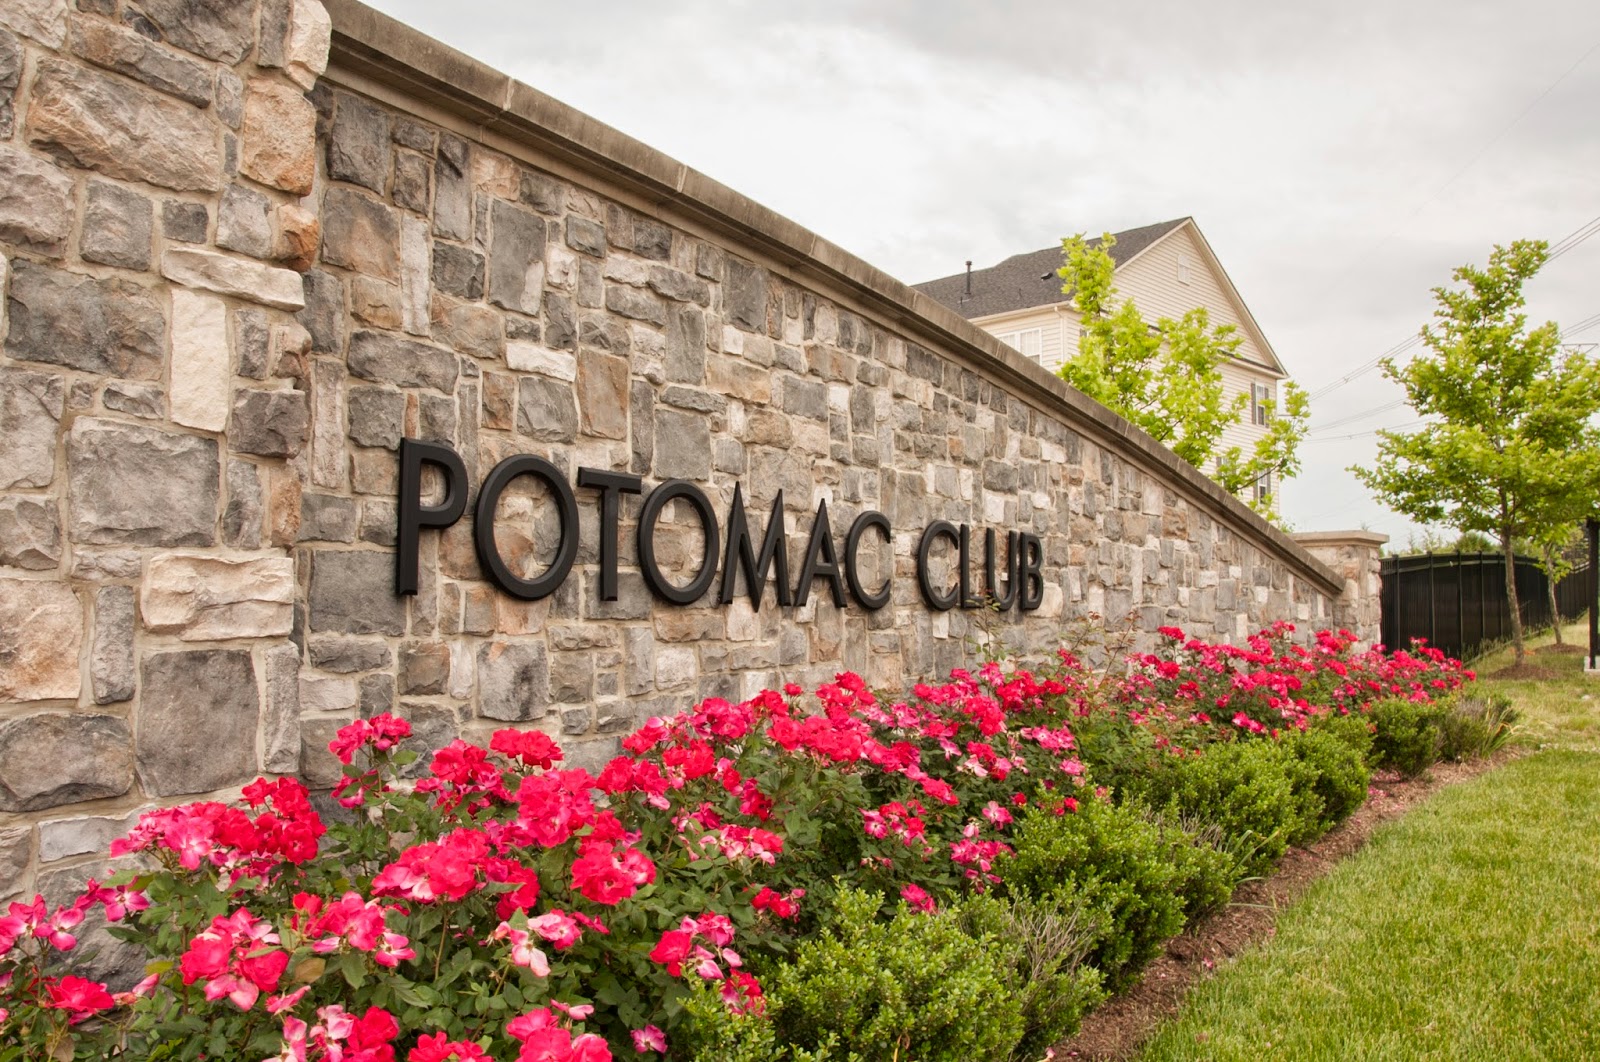 Potomac Club Woodbridge VA